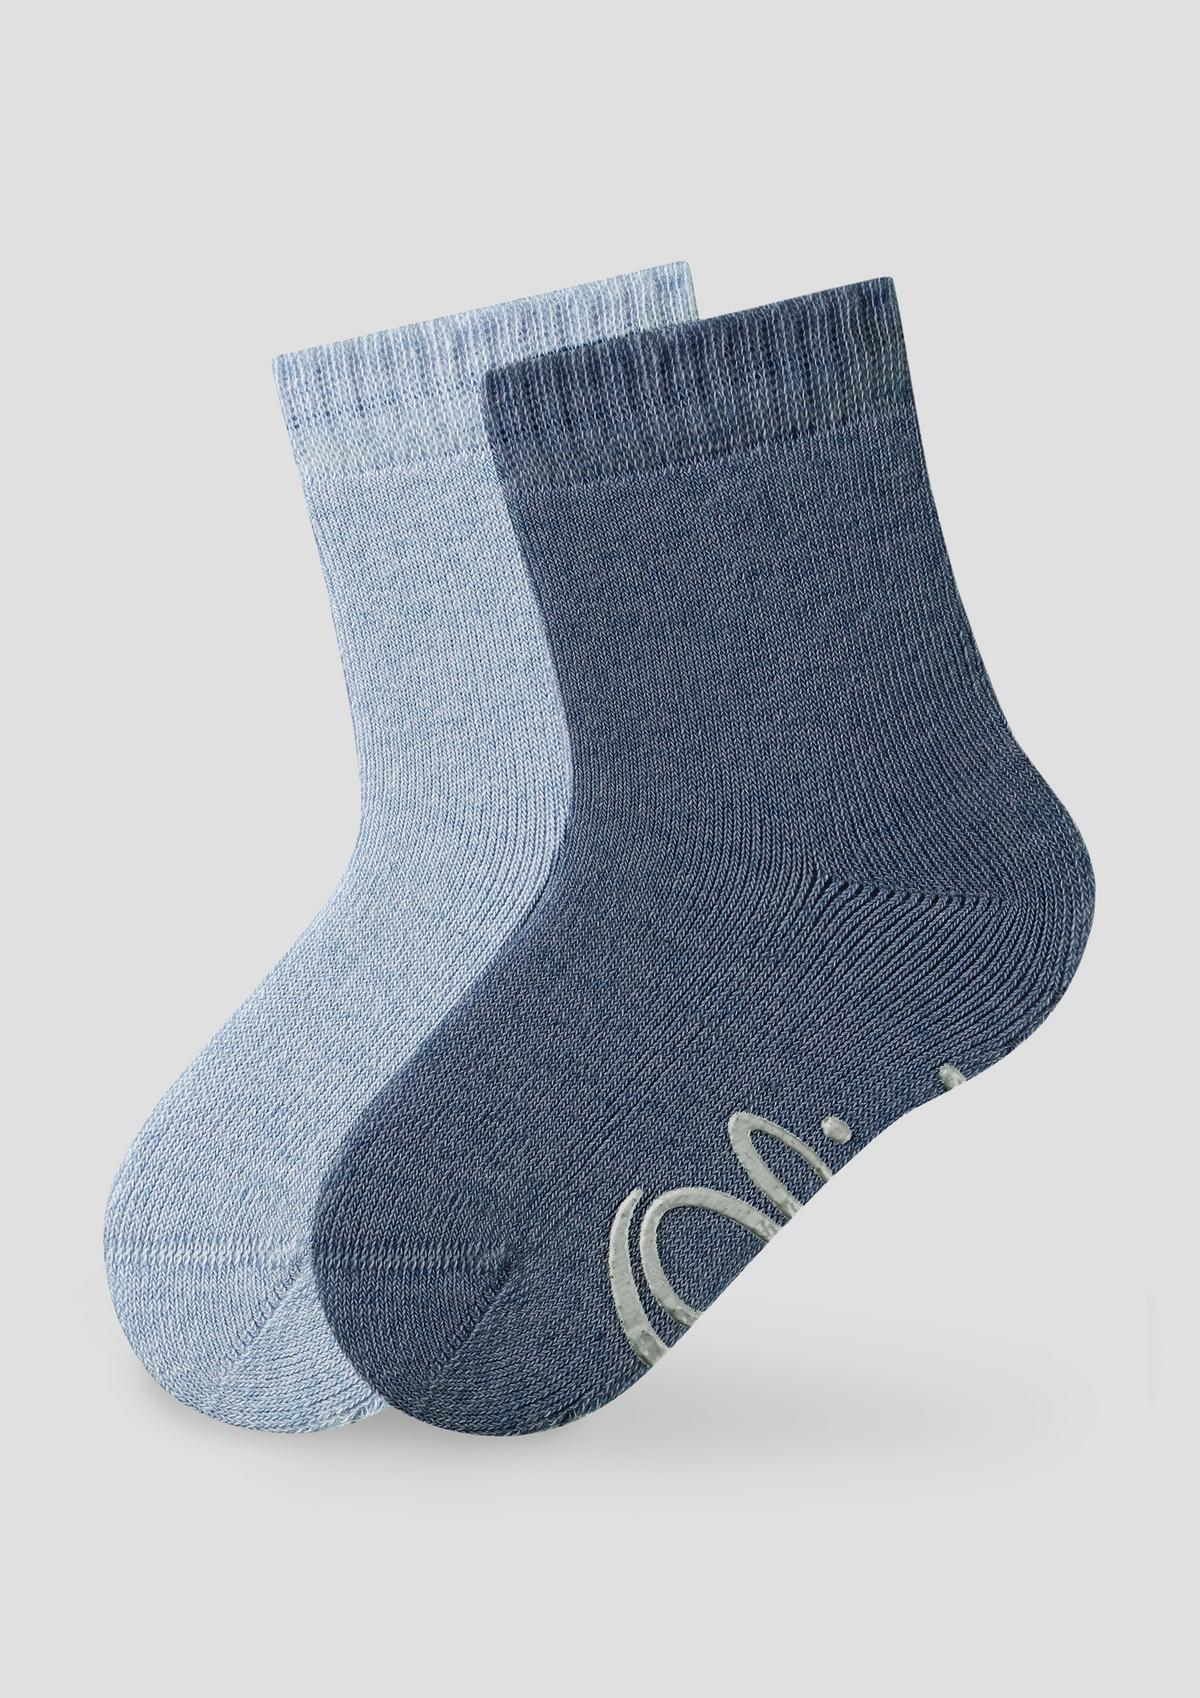 s.Oliver Set van 2 paar gemêleerde sokken